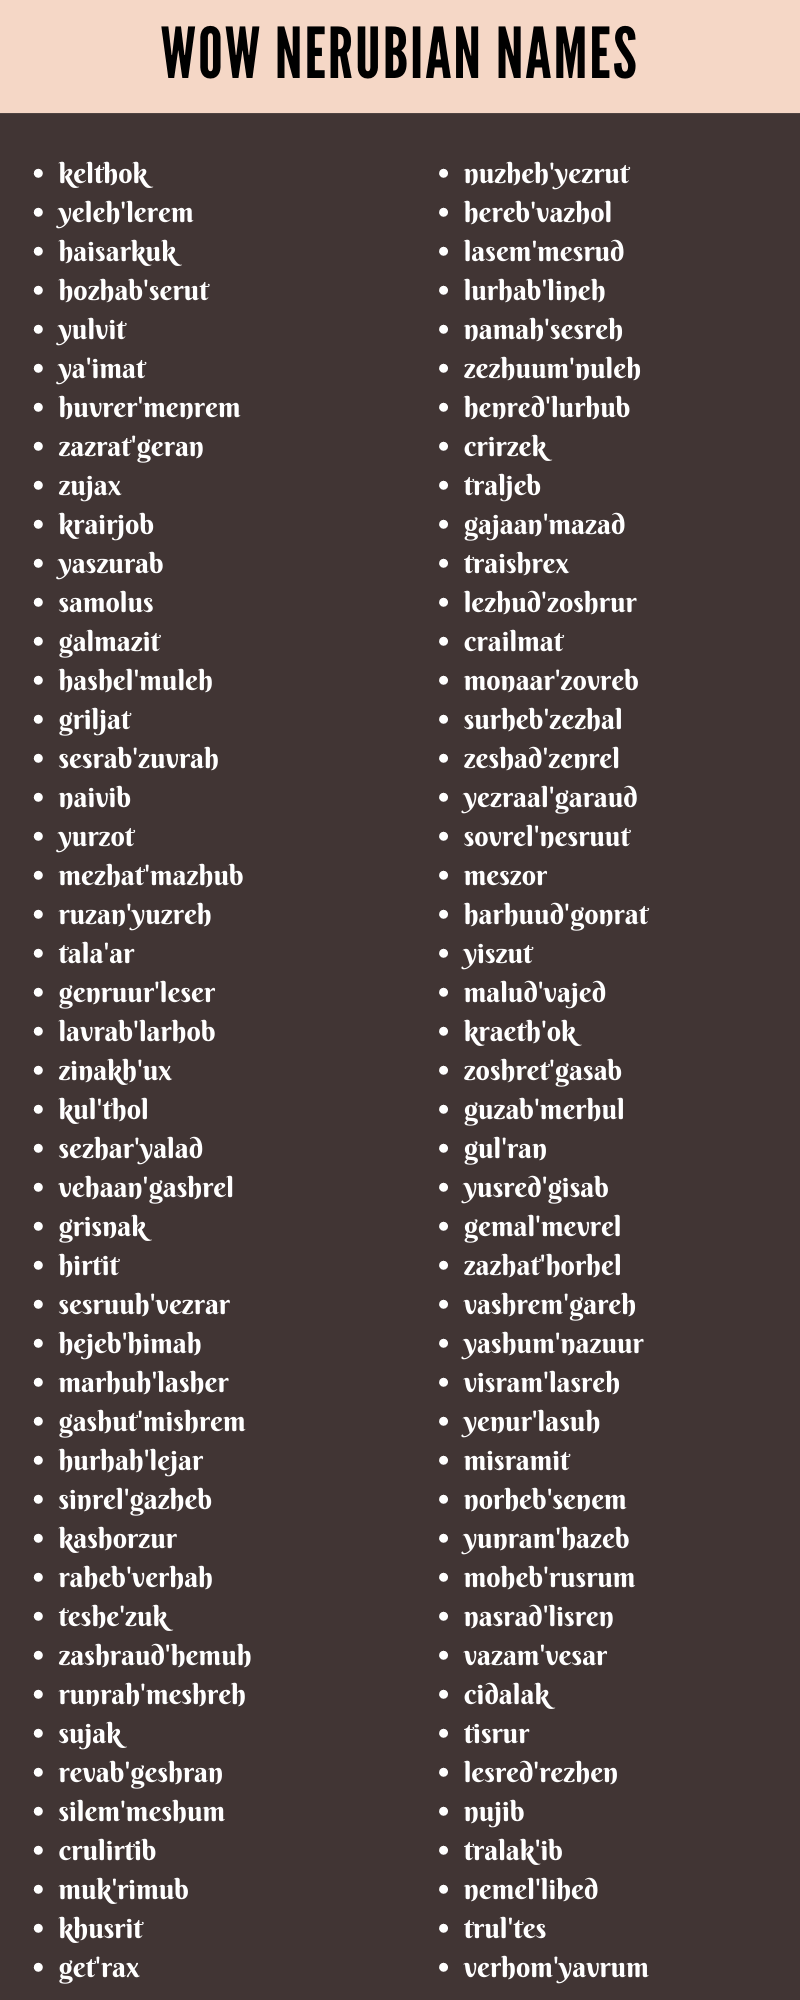 Wow Nerubian Names